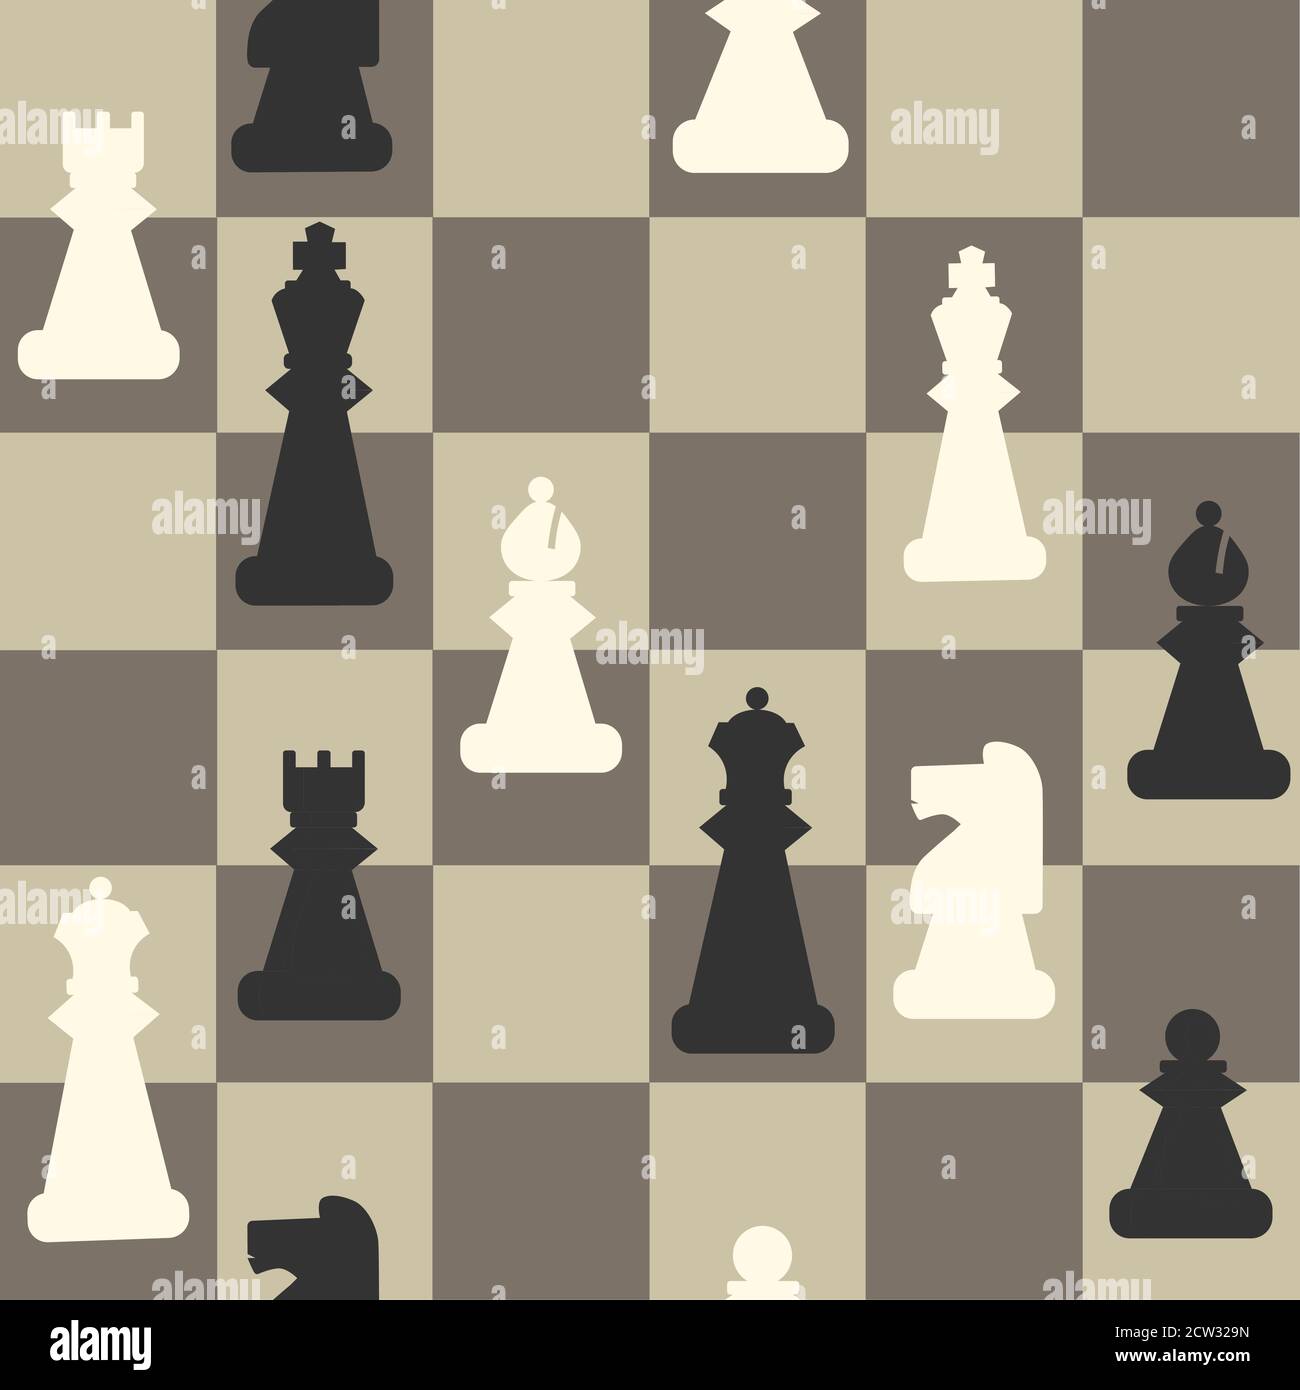 Chess Pieces Set Figure Names Stock Illustration 589663376